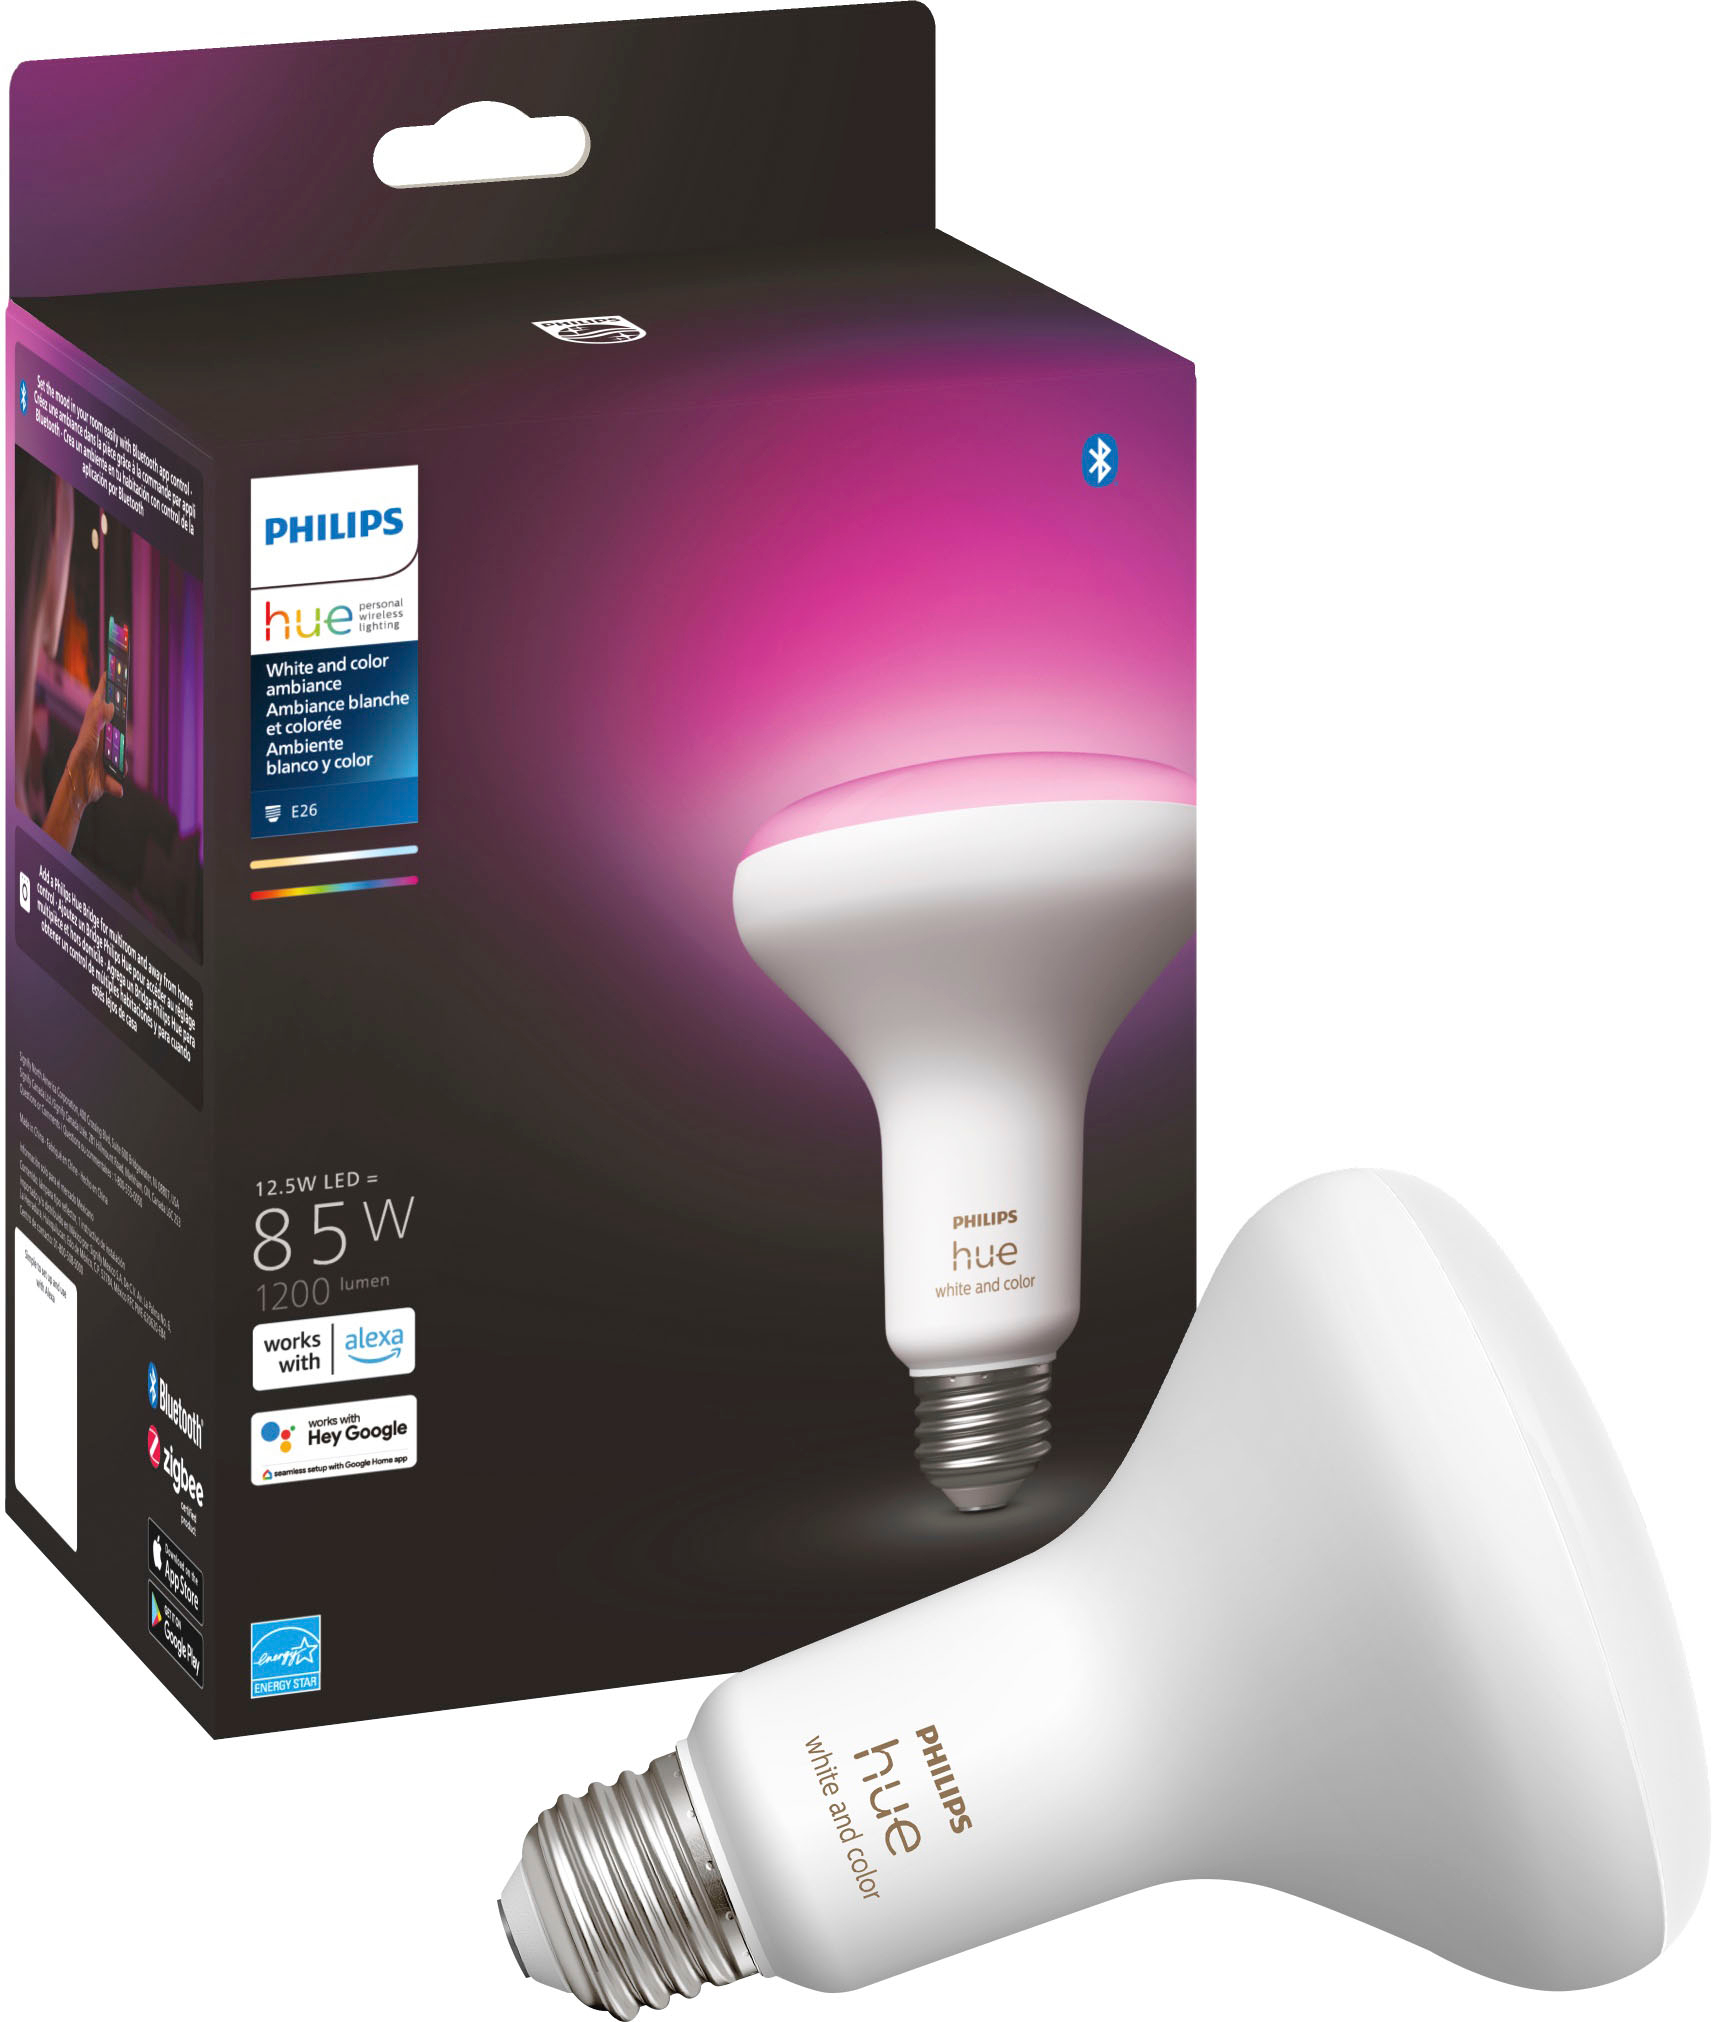 Manchuriet Prisnedsættelse Rendition Philips Hue BR30 Bluetooth 85W Smart LED Bulb White and Color Ambiance  577956 - Best Buy